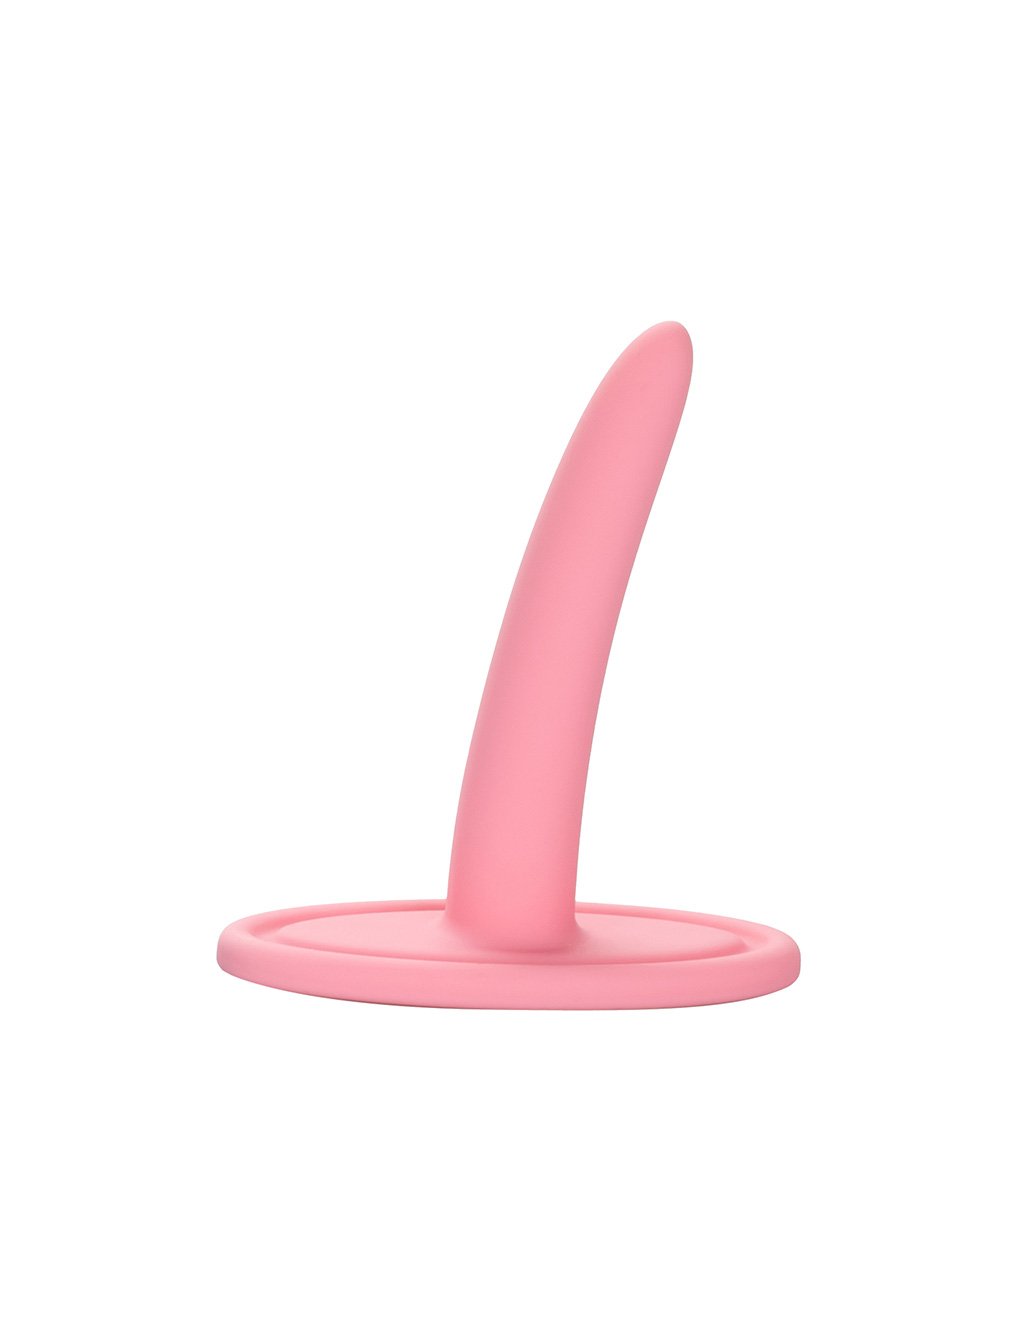 She-Ology 5 Piece Vaginal Dilator Set- Small pink